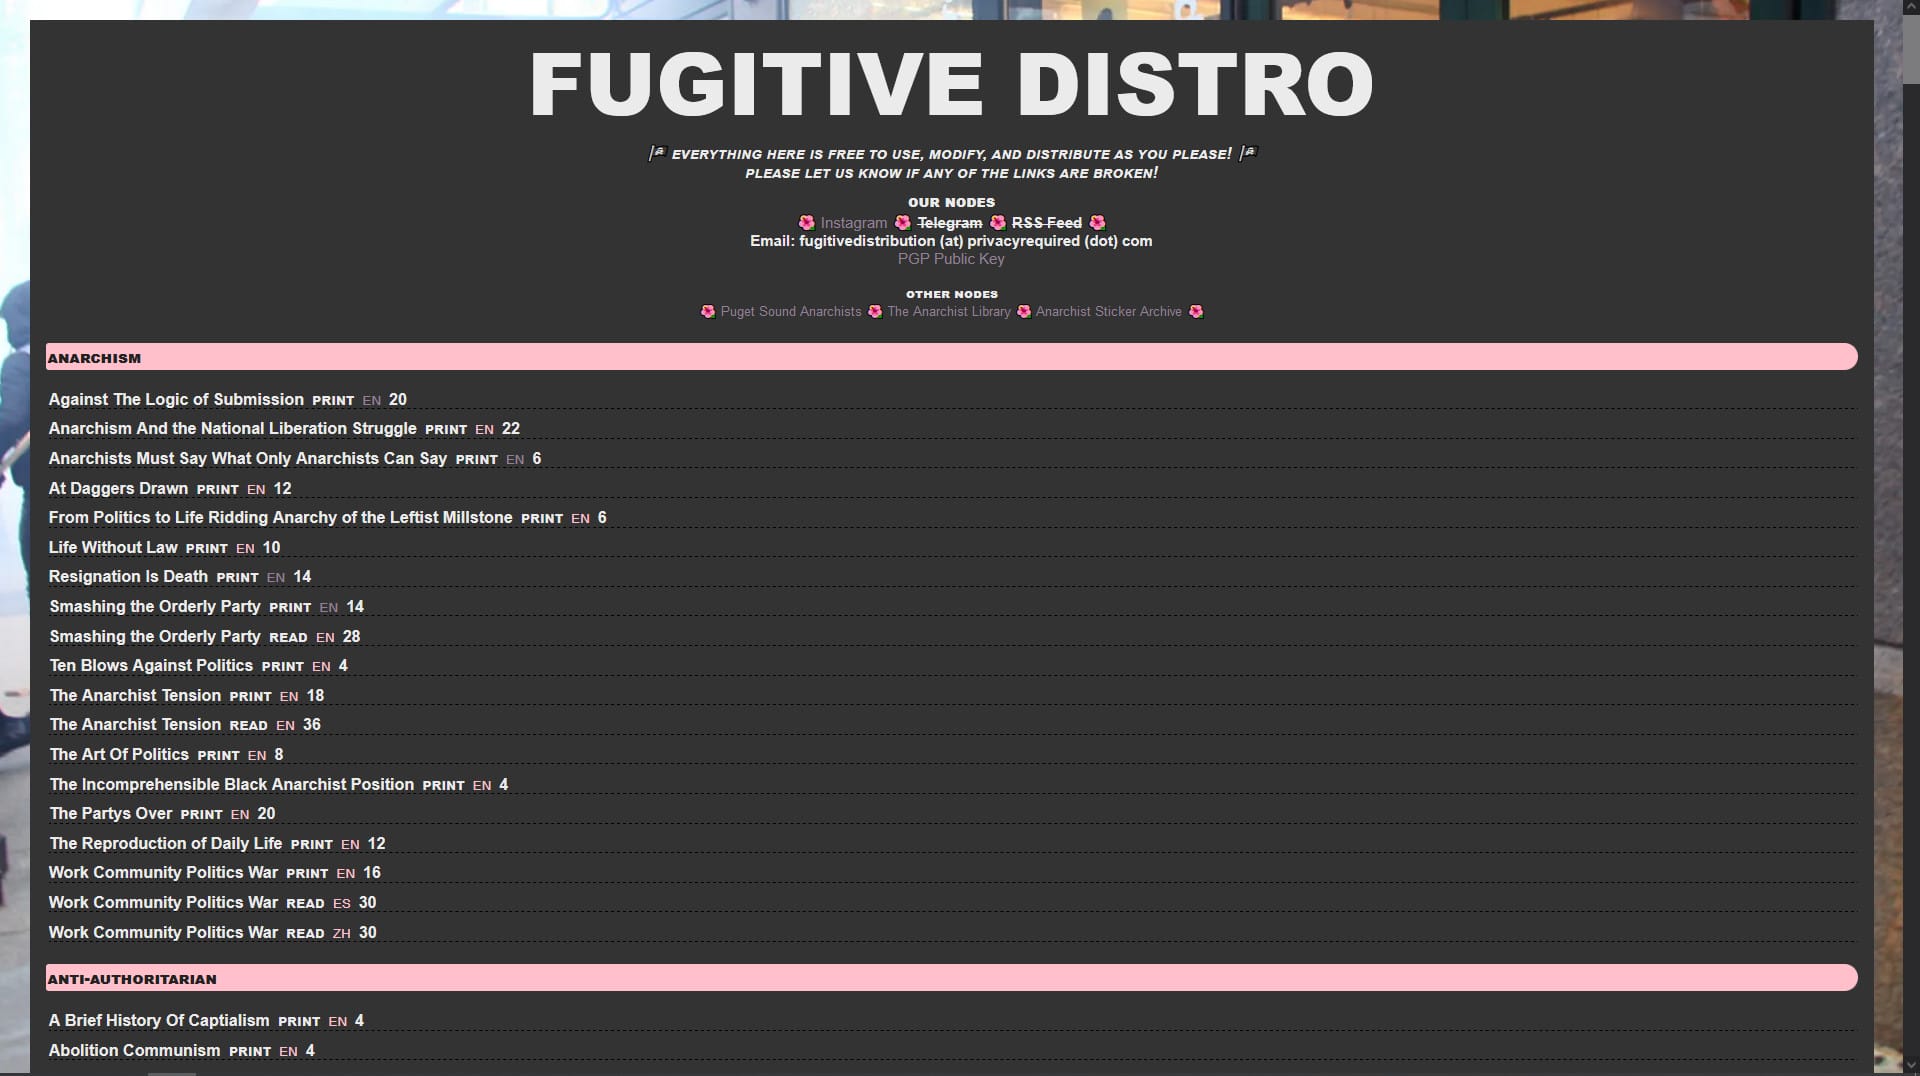 A screenshot of the Fugitive Distro website